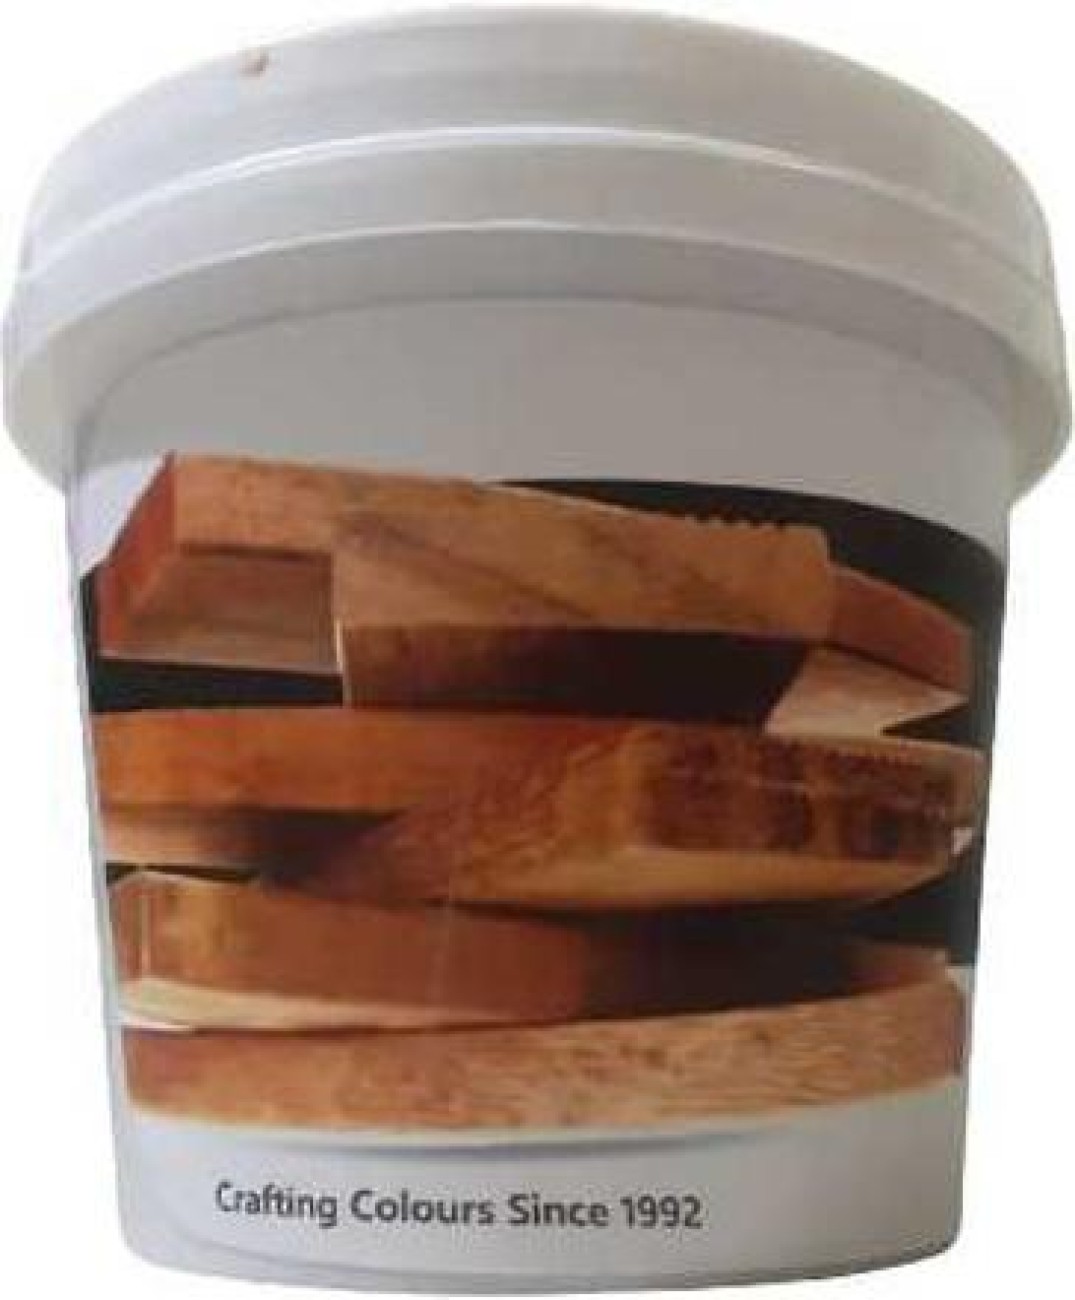 Texmantra Wood Filler (White) Crack Filler Price in India - Buy Texmantra  Wood Filler (White) Crack Filler online at